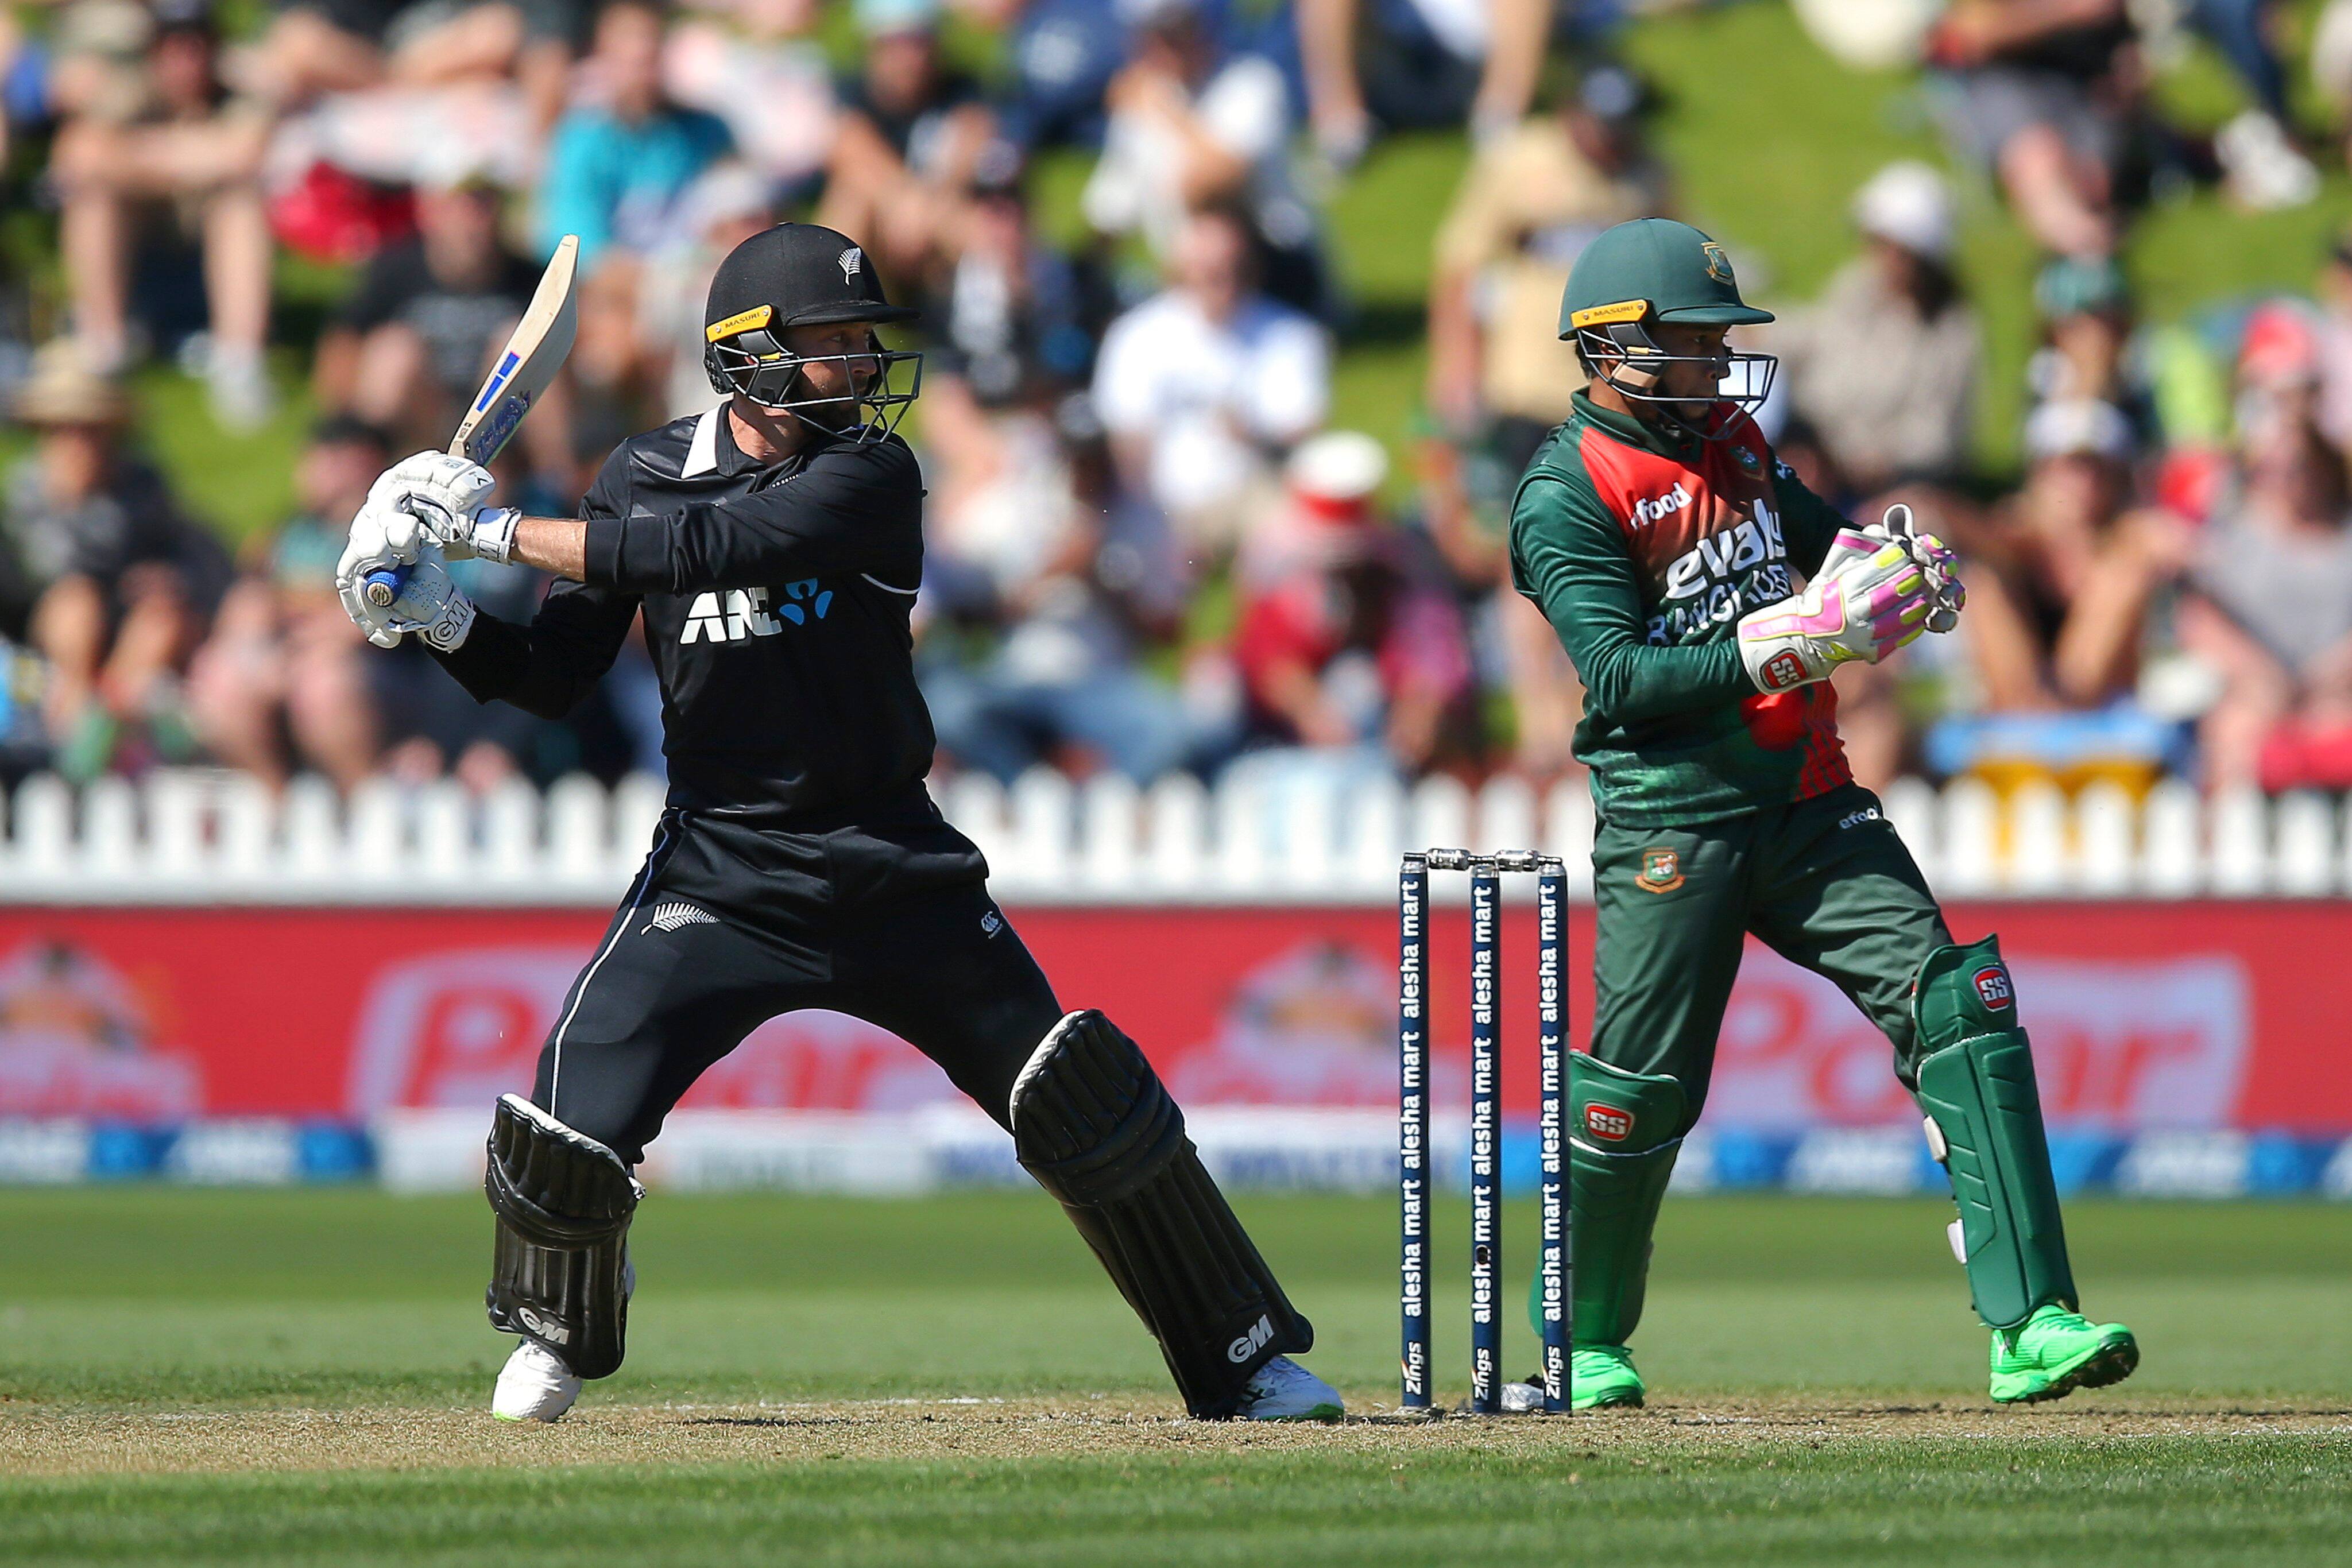 New Zealand's Devon Conway en route to scoring his maiden ODI century against Bangladesh in the third ODI. (Source: Twitter)